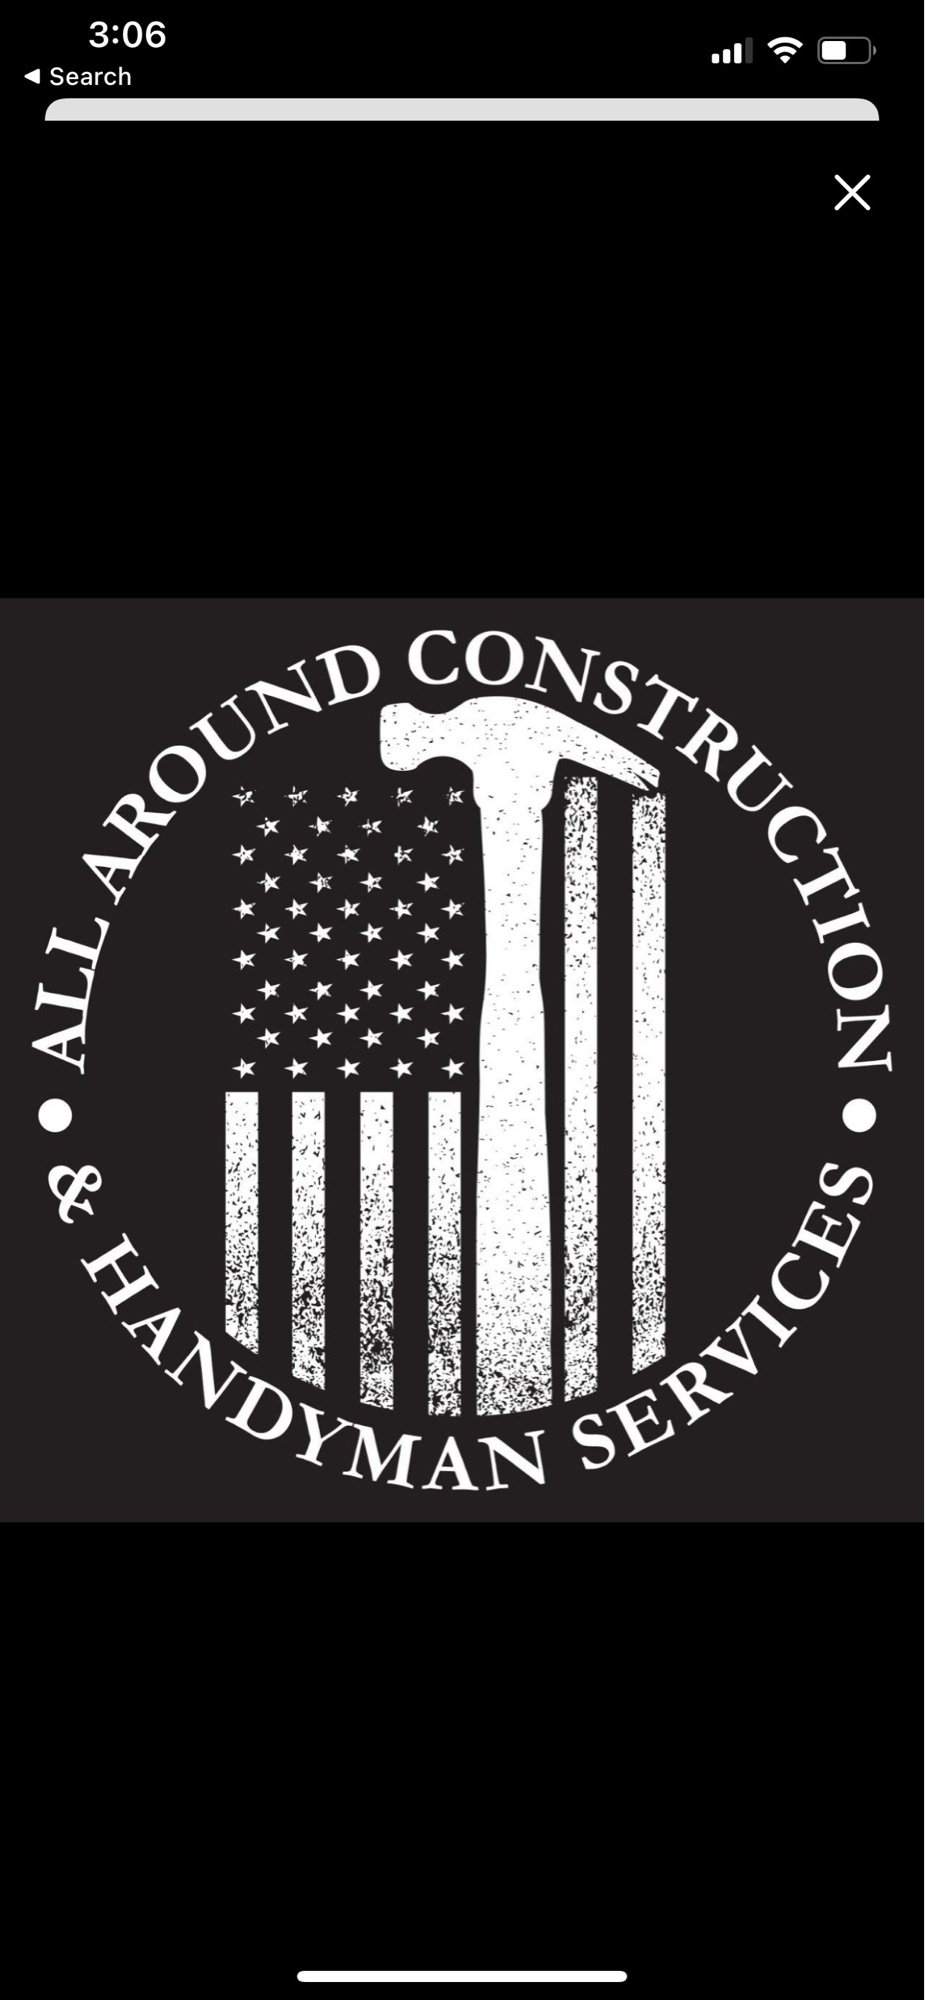 All Around Construction & Handyman Services Logo